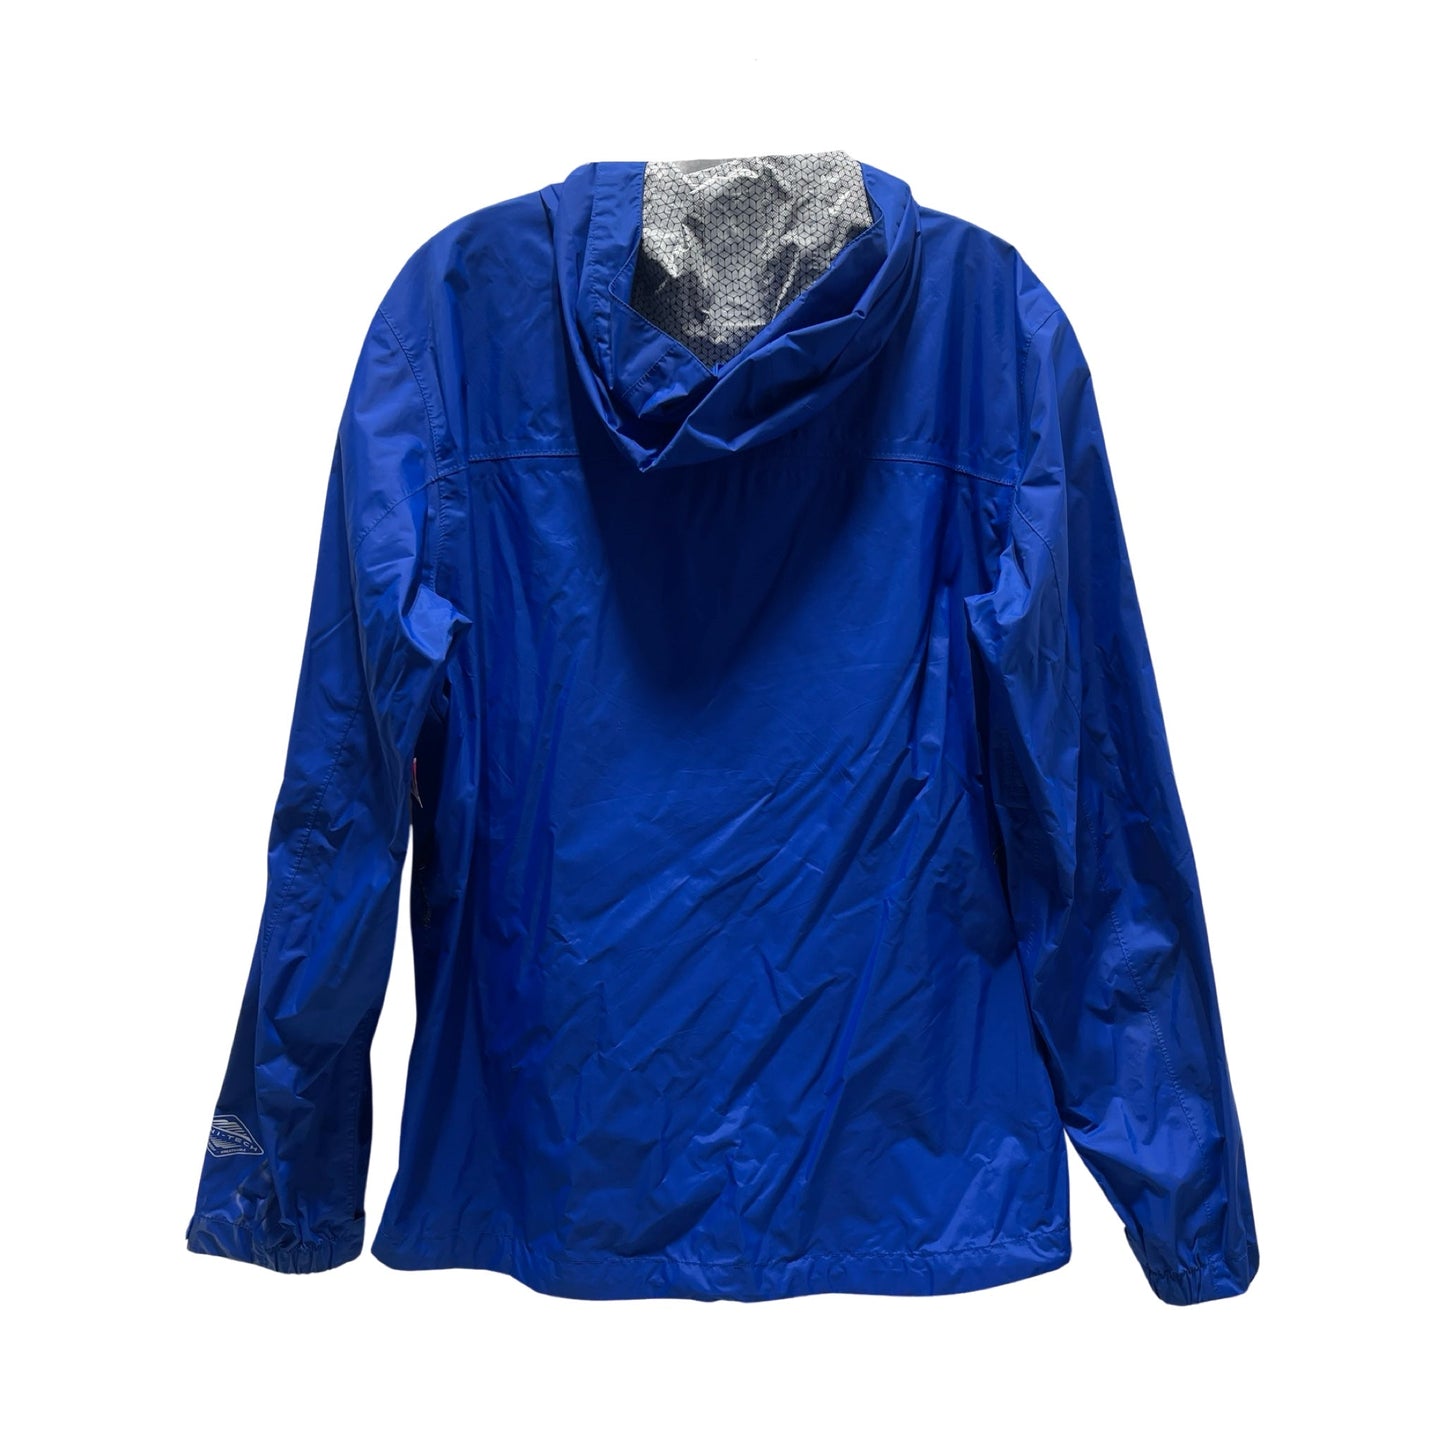 Coat Raincoat By Columbia  Size: M